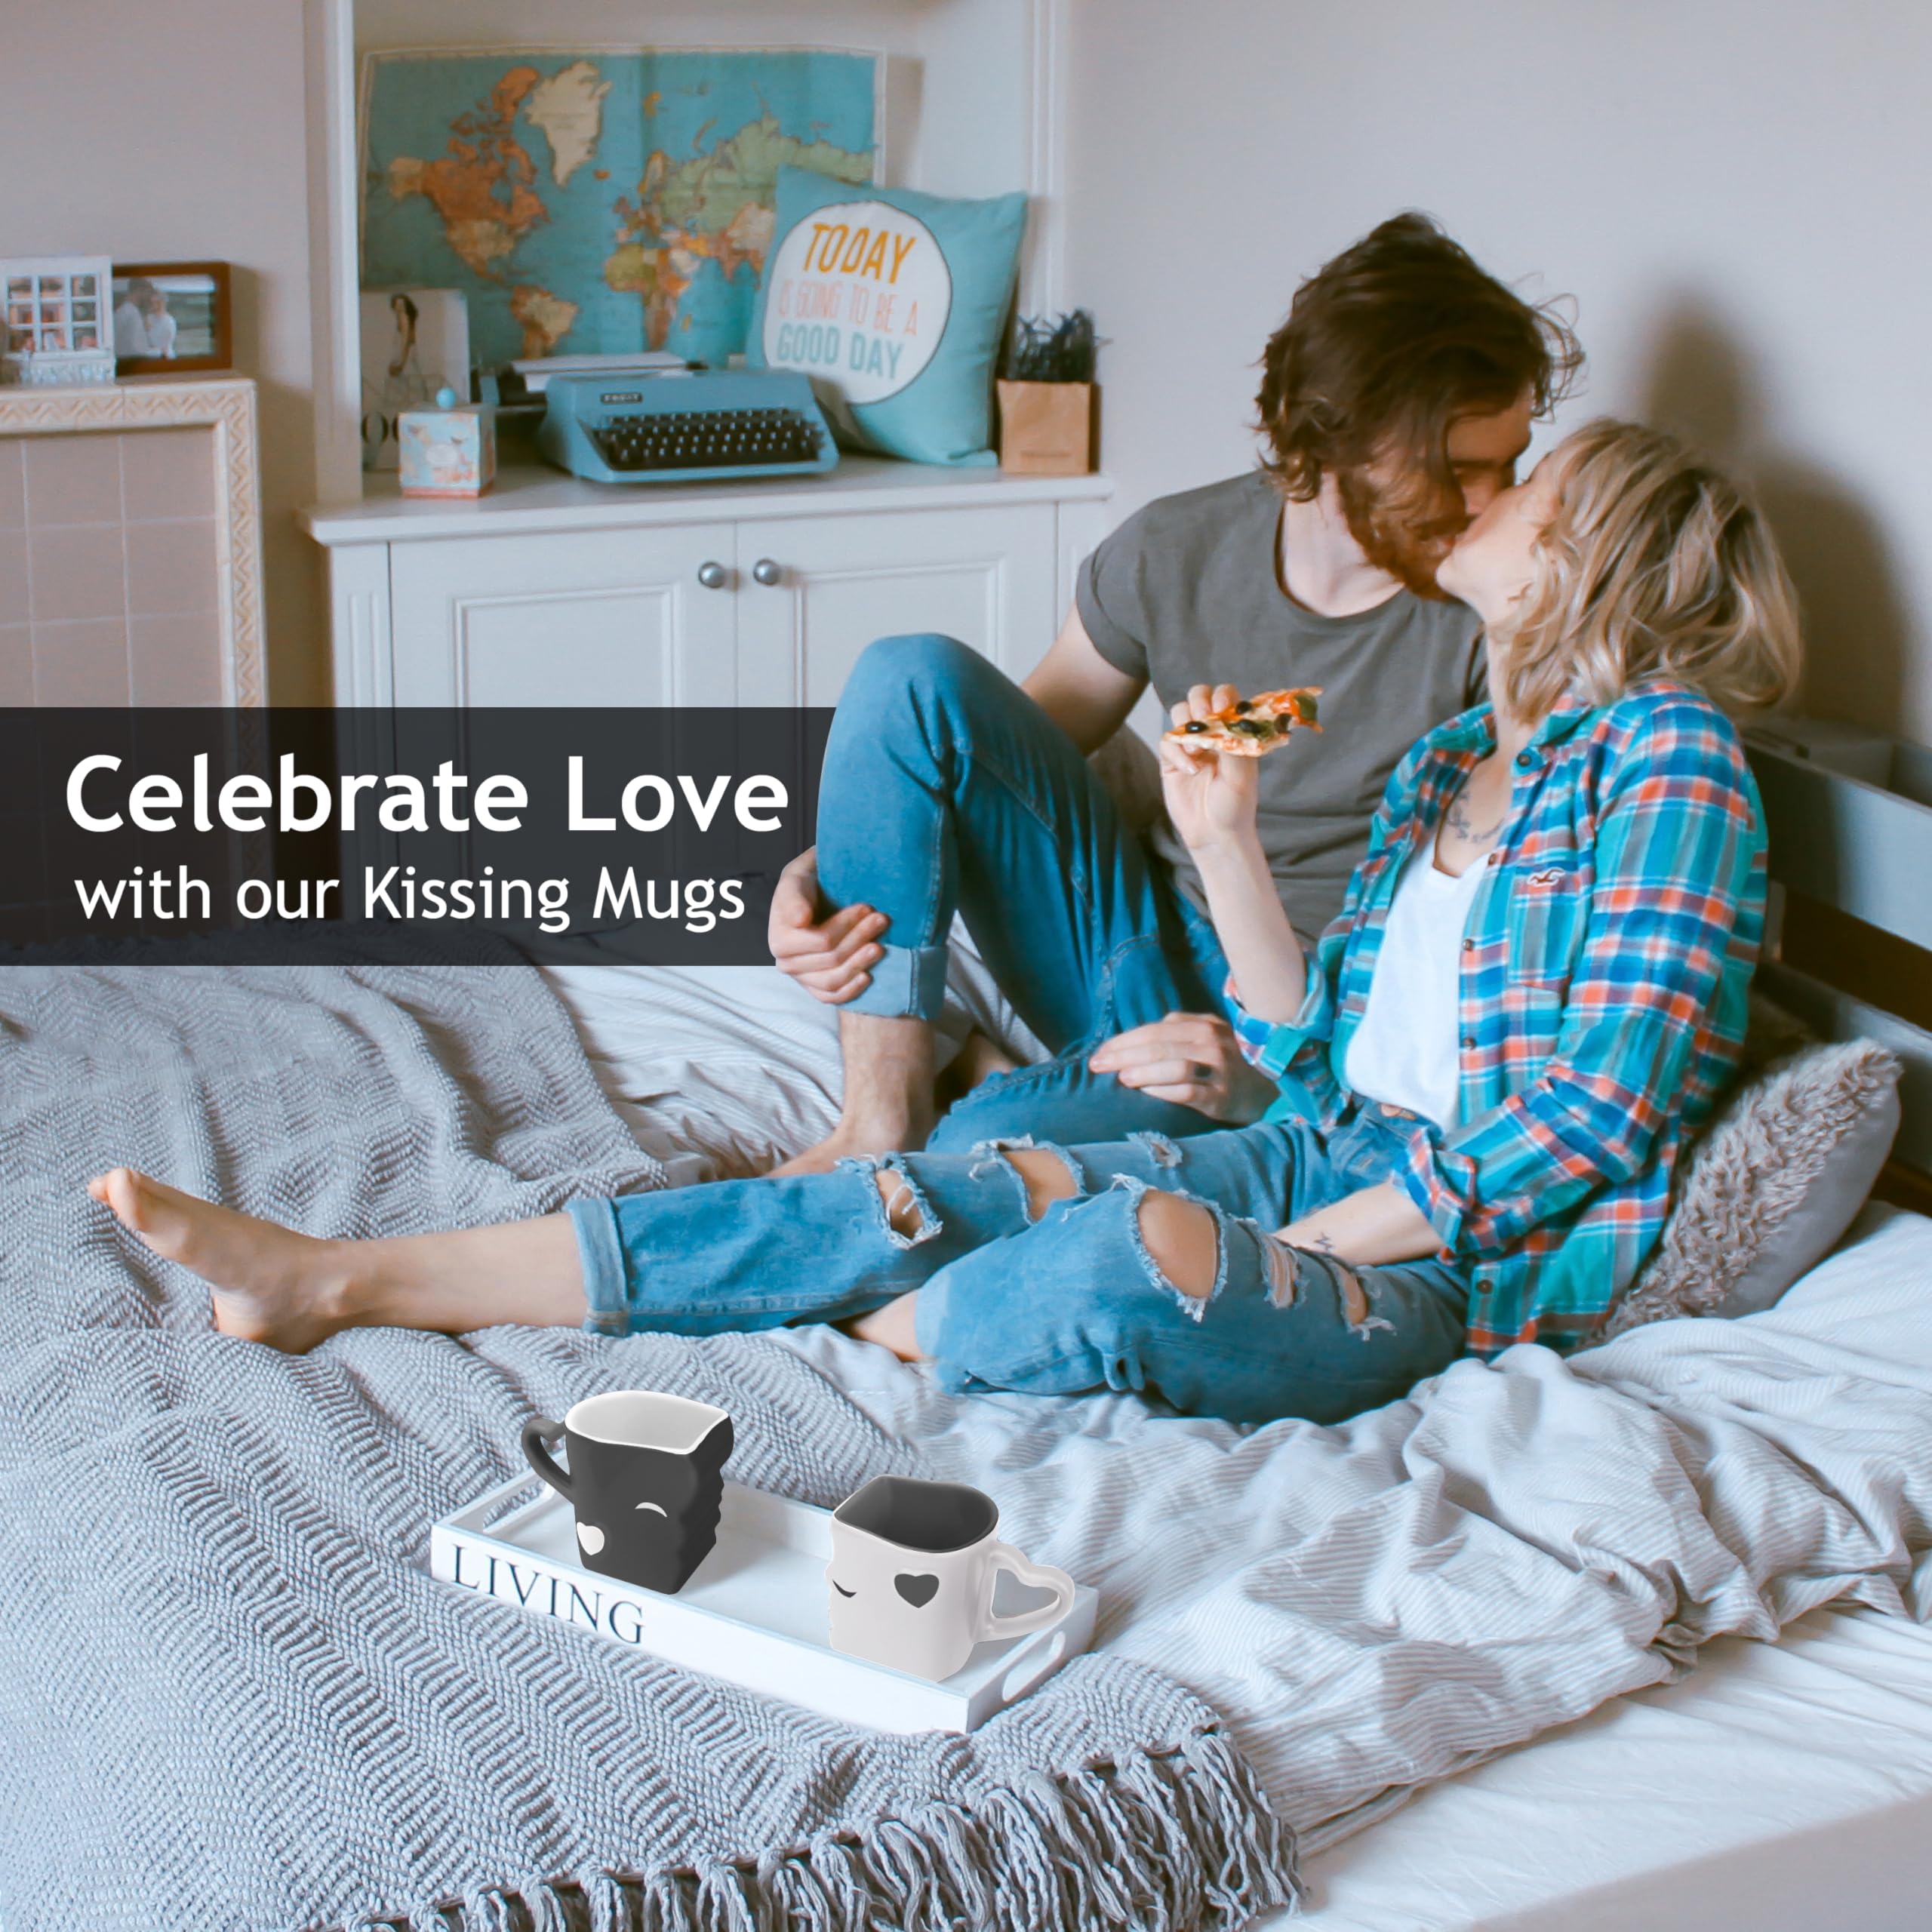 MIAMIO - Coffee Mugs/Kissing Mugs Bridal Pair Gift Set for Weddings/Birthday/Anniversary with Gift Box (Gray)